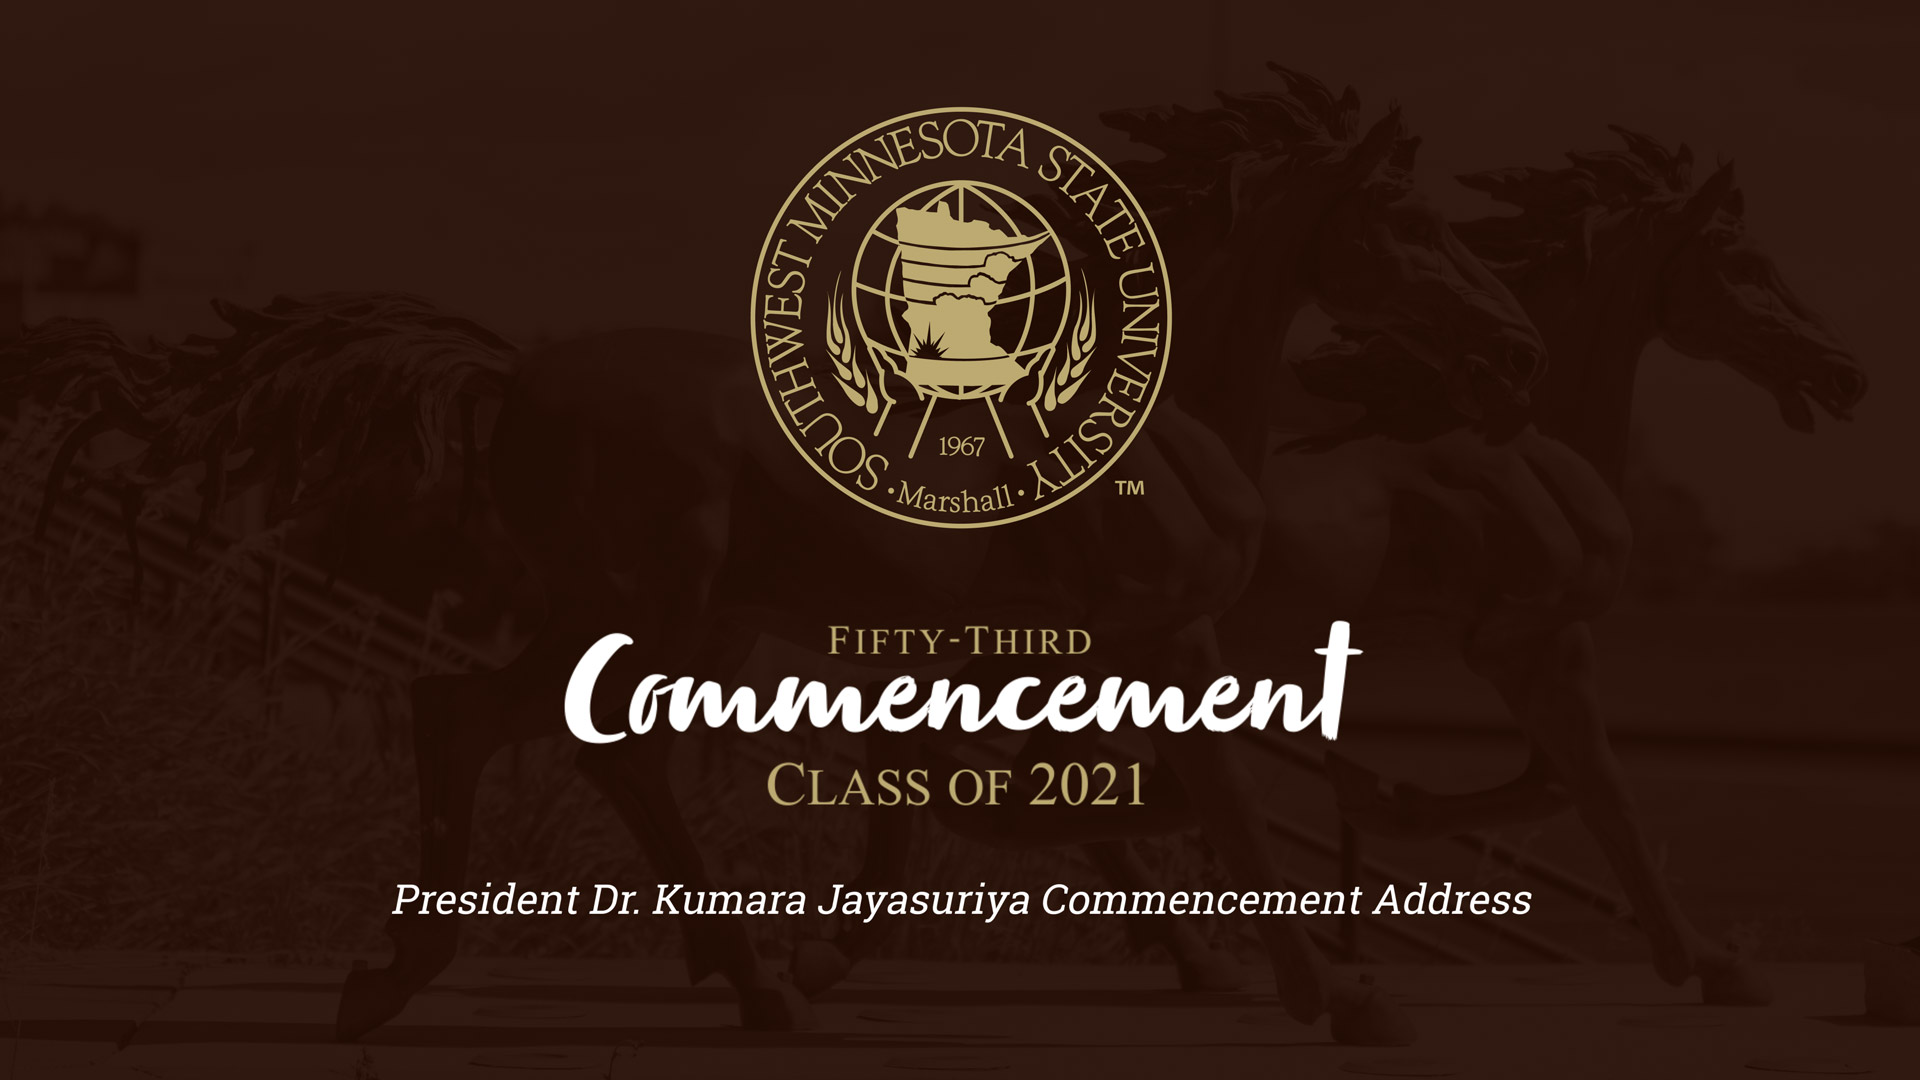 President Kumara Jayasuriya Commencement Address: Class of 2021